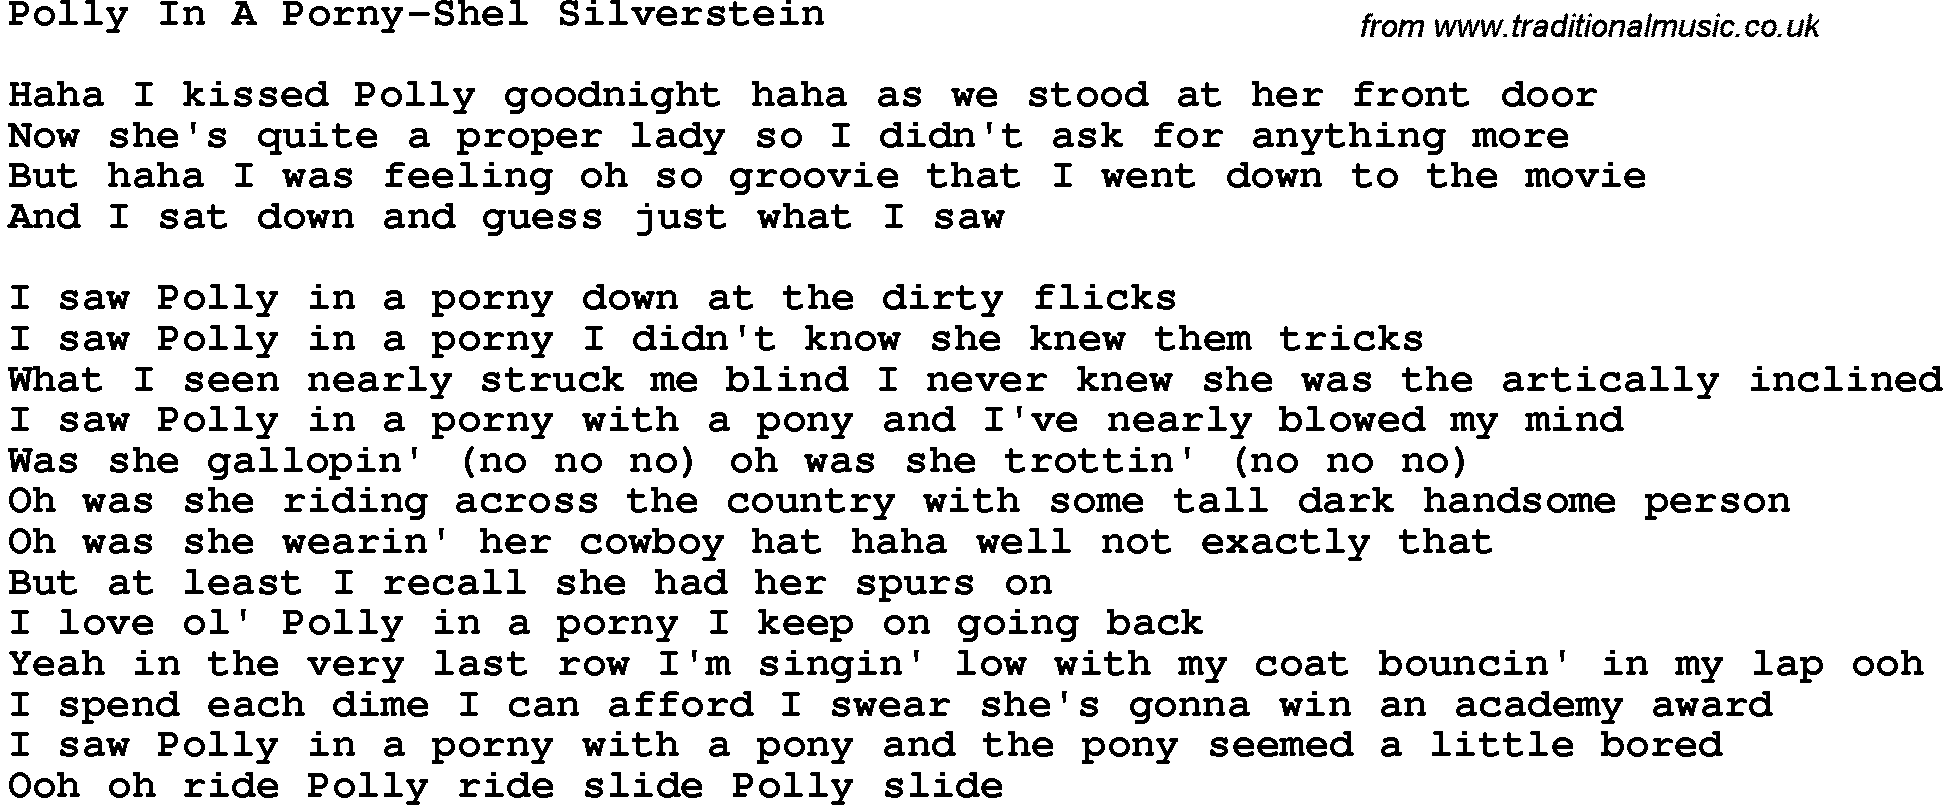 Novelty song: Polly In A Porny-Shel Silverstein lyrics